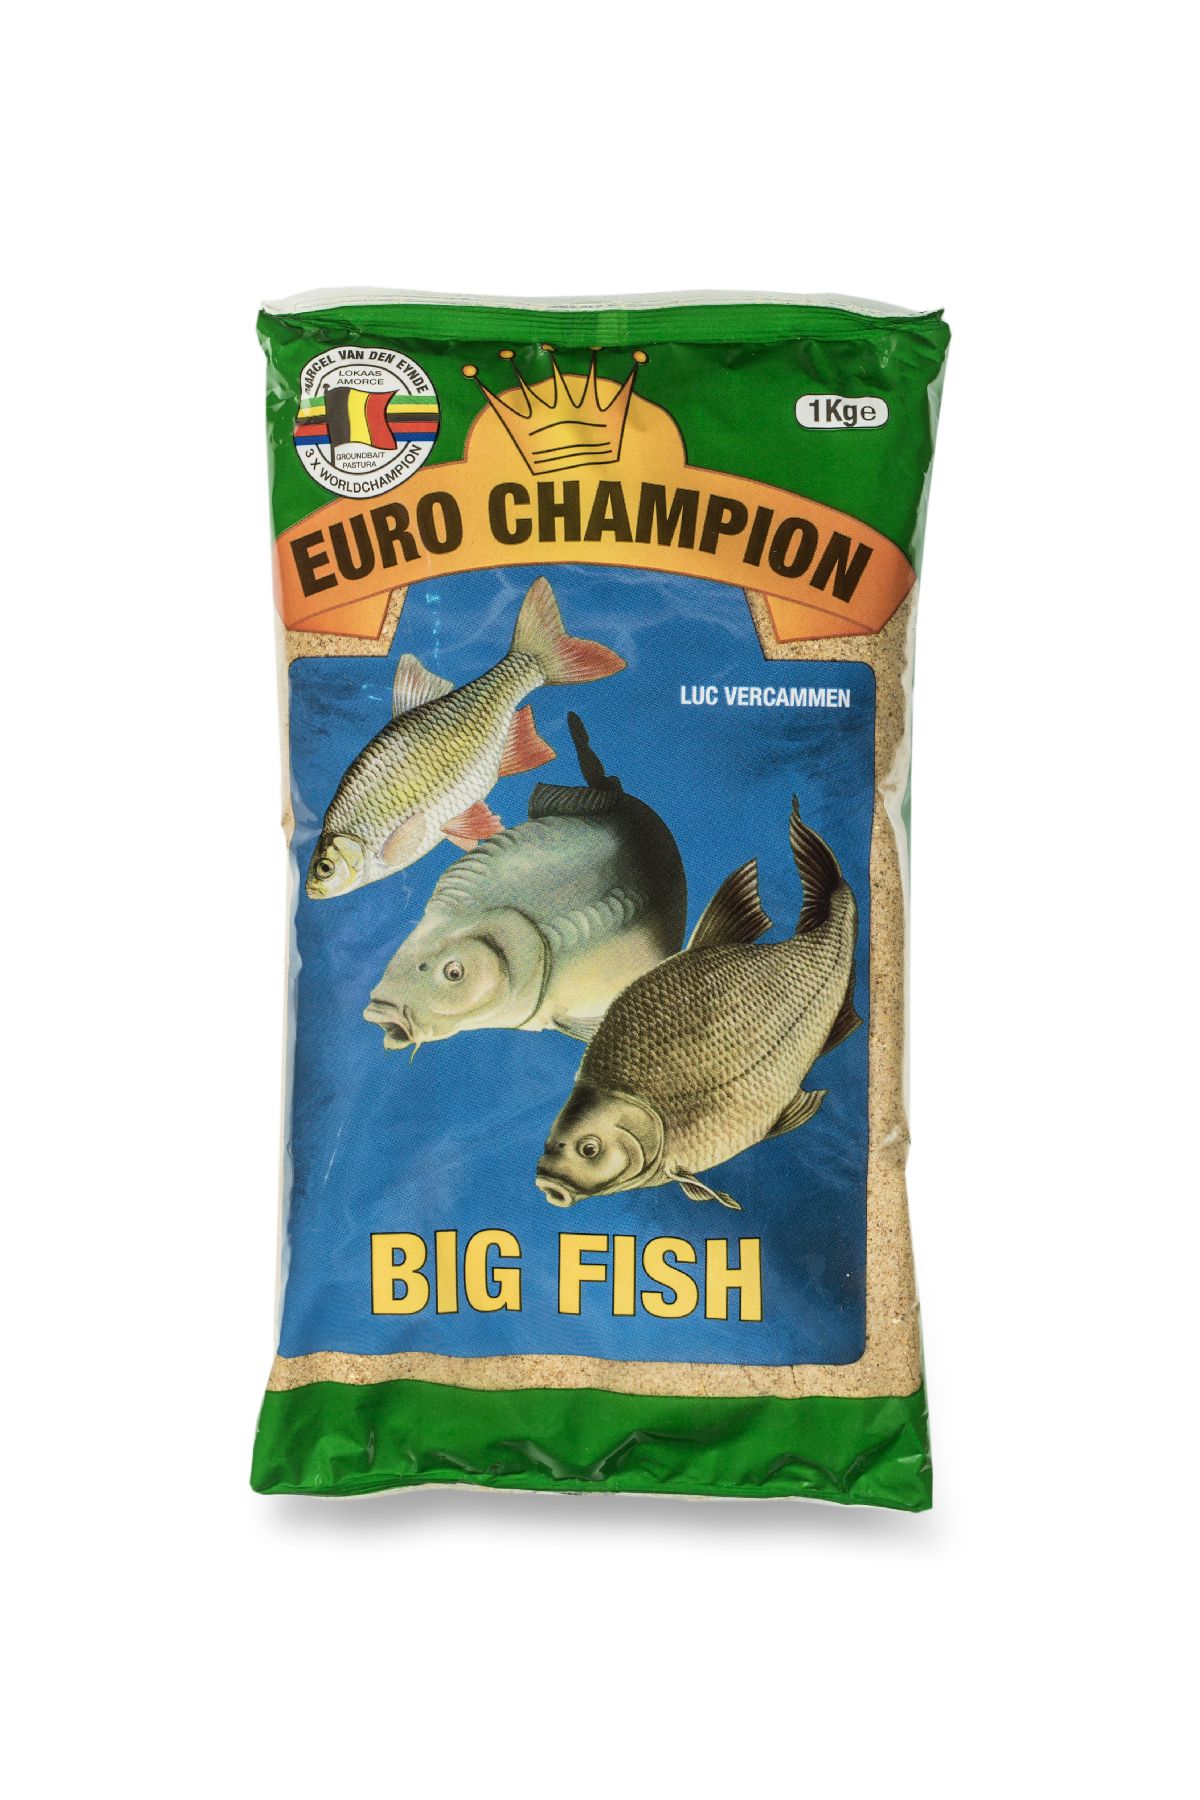 Mengenrabatt vd Eynde Big Fish 12x1 kg